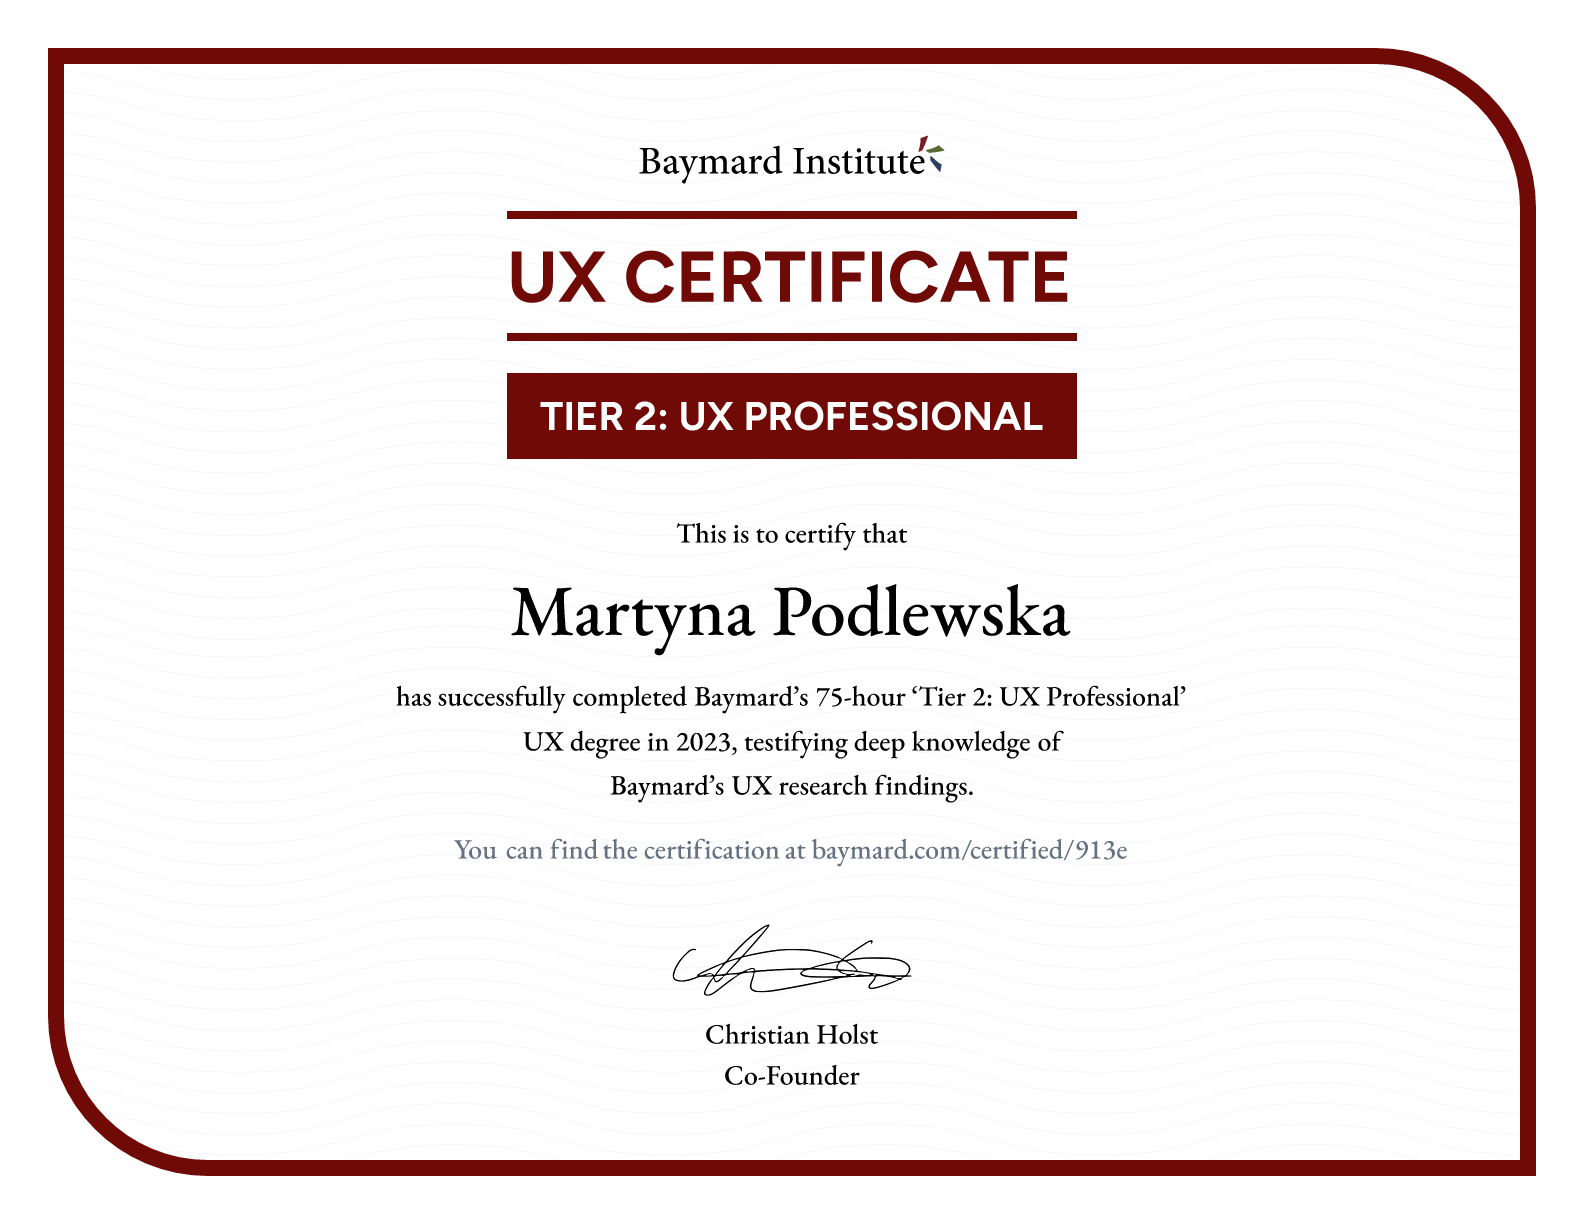 Martyna Podlewska’s certificate